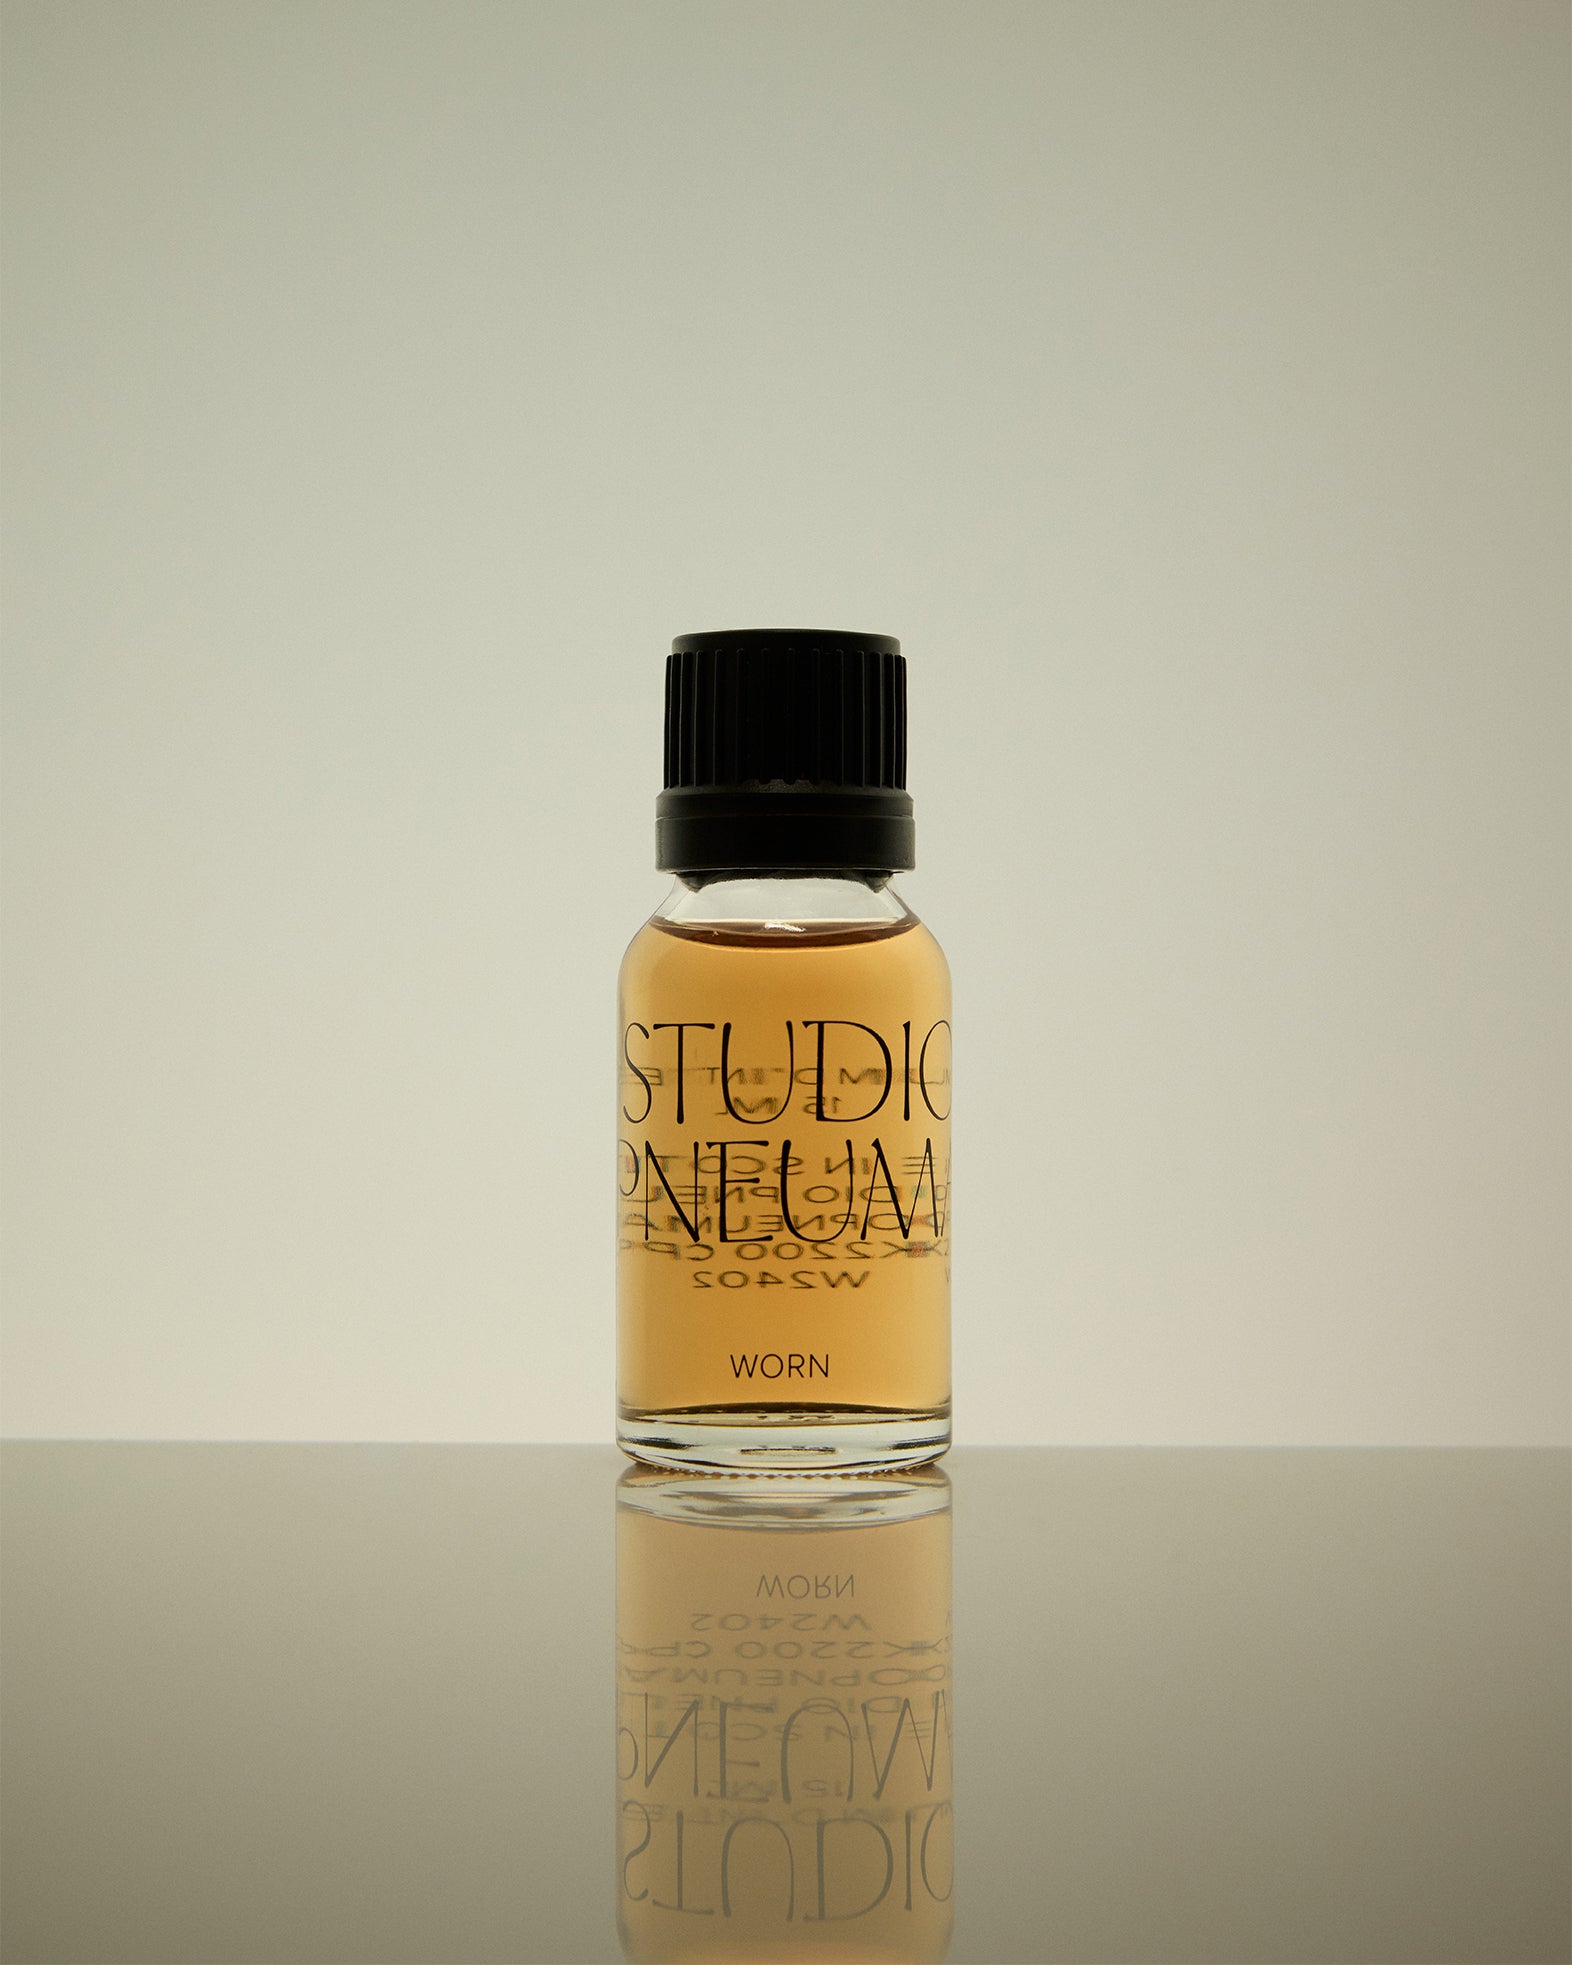 Worn, Room Fragrance, 15 ml